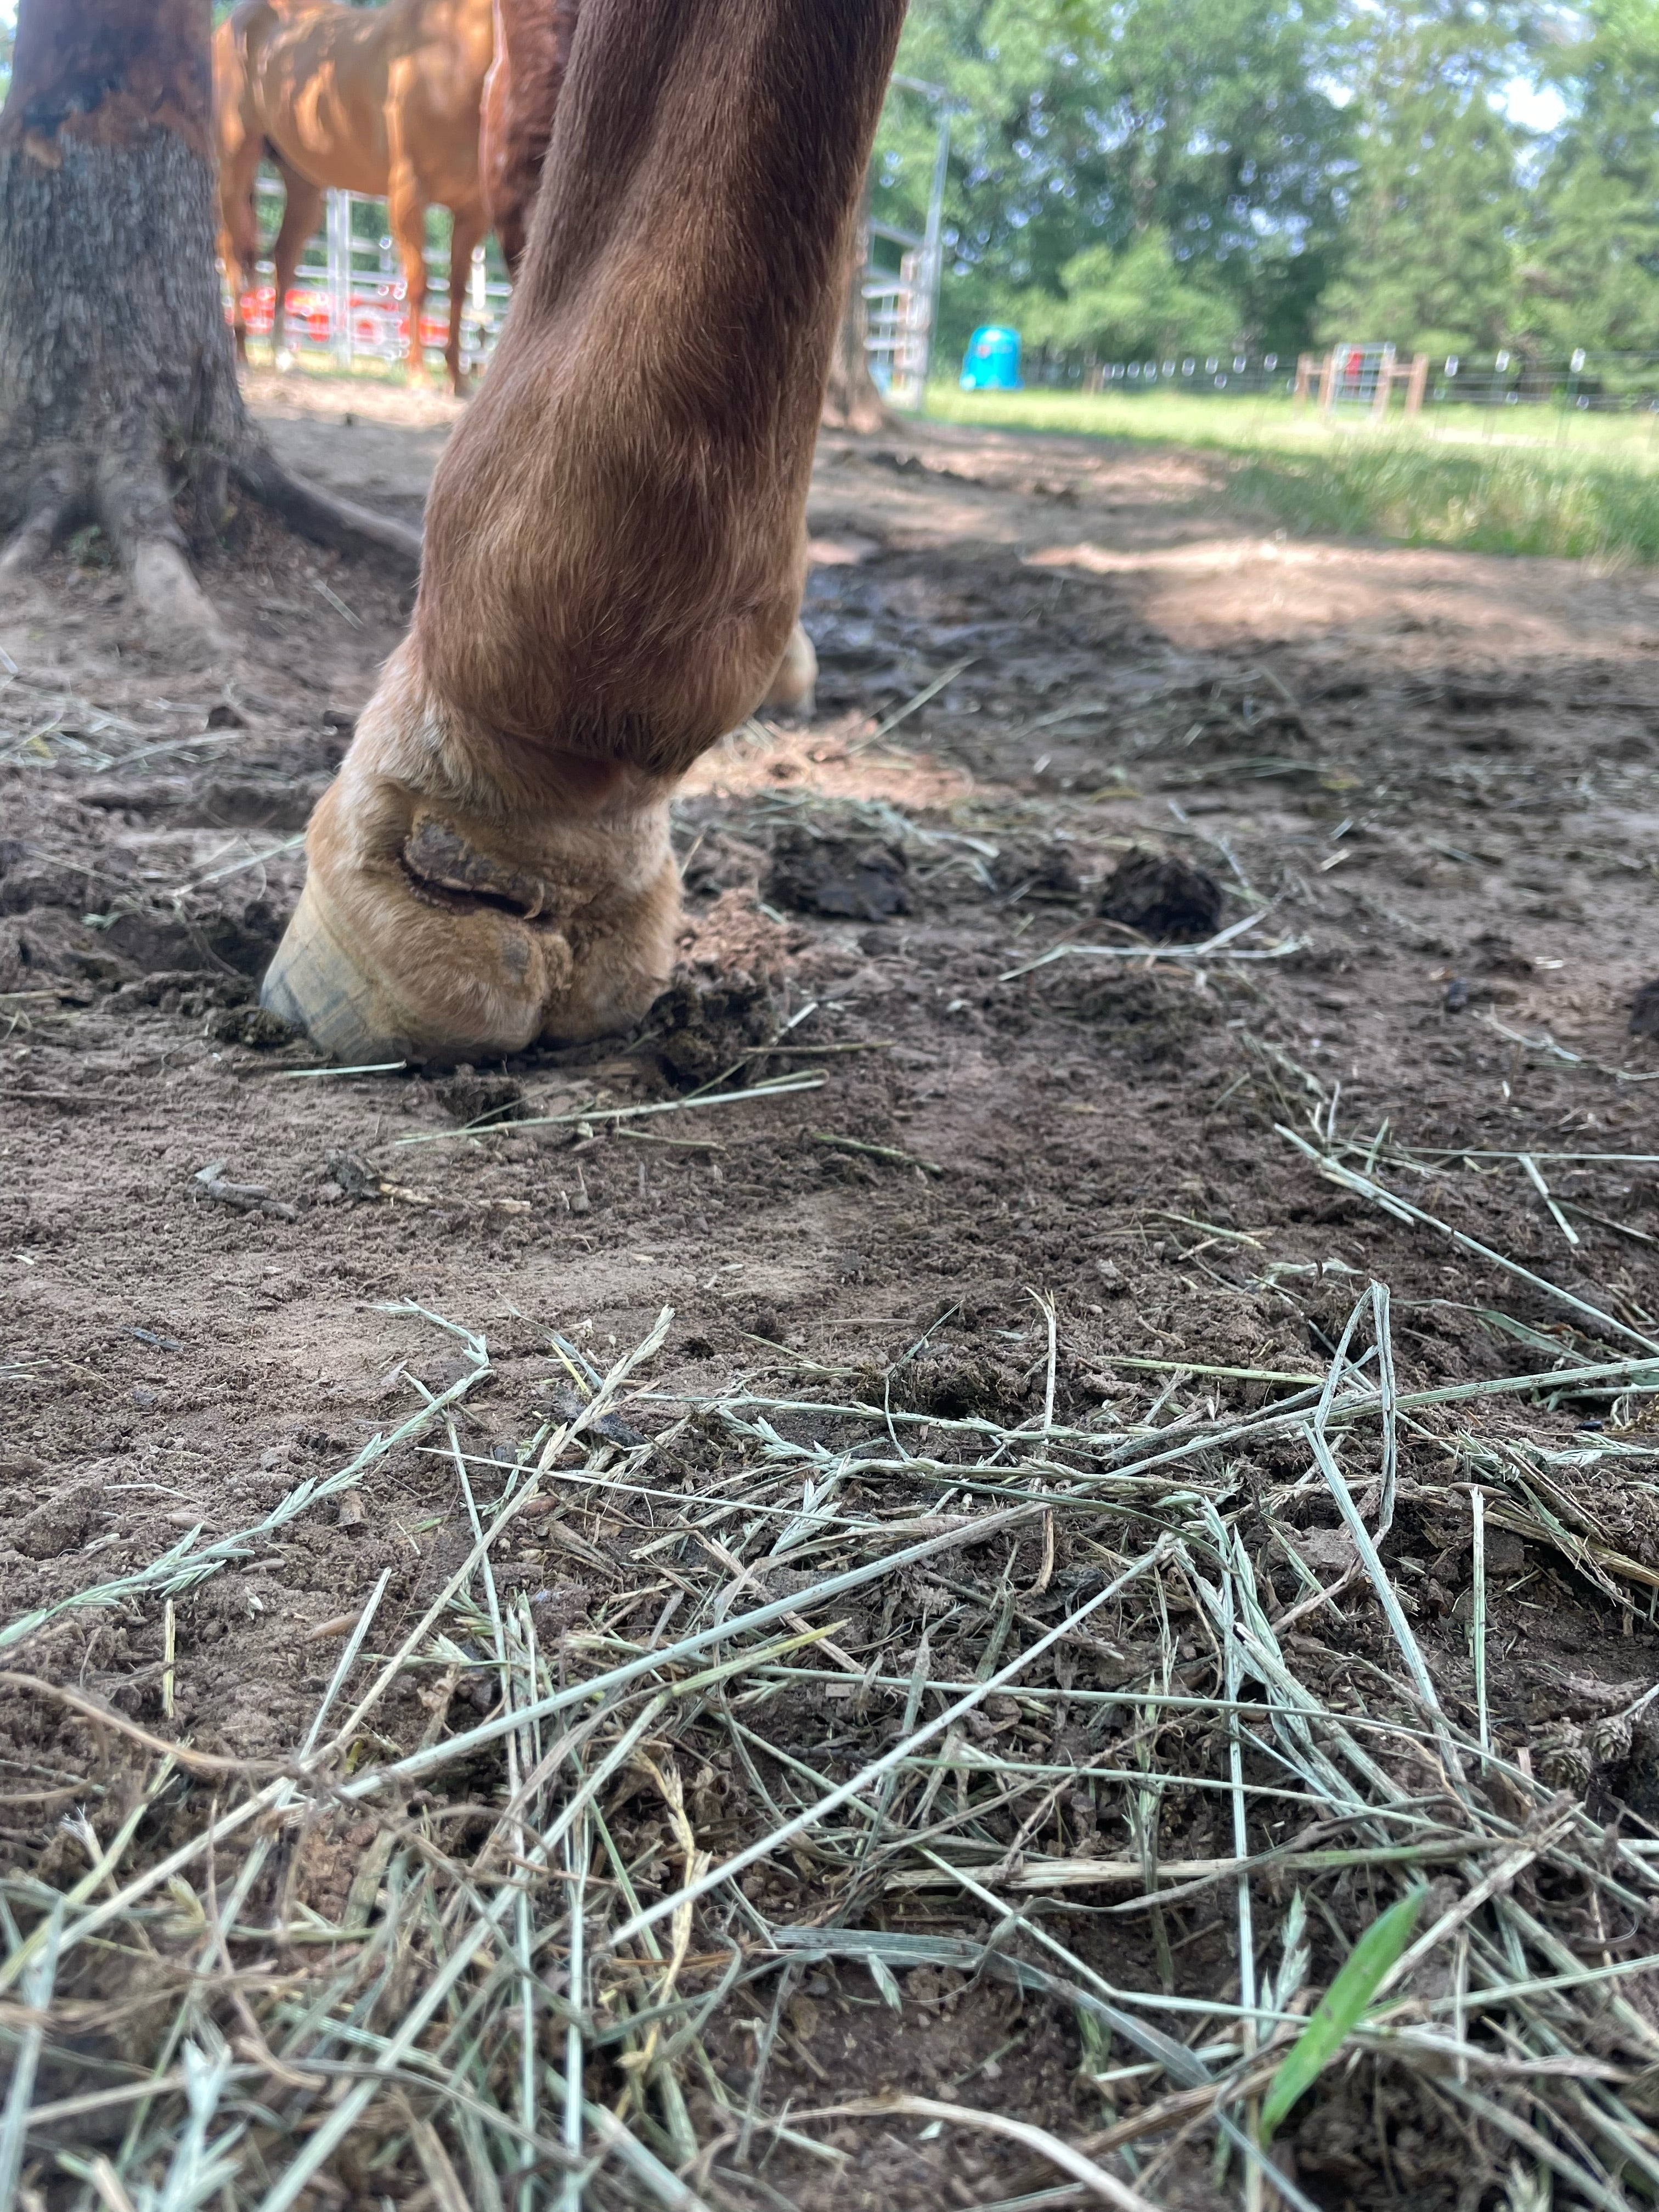 Horse: Injured back leg all healed up